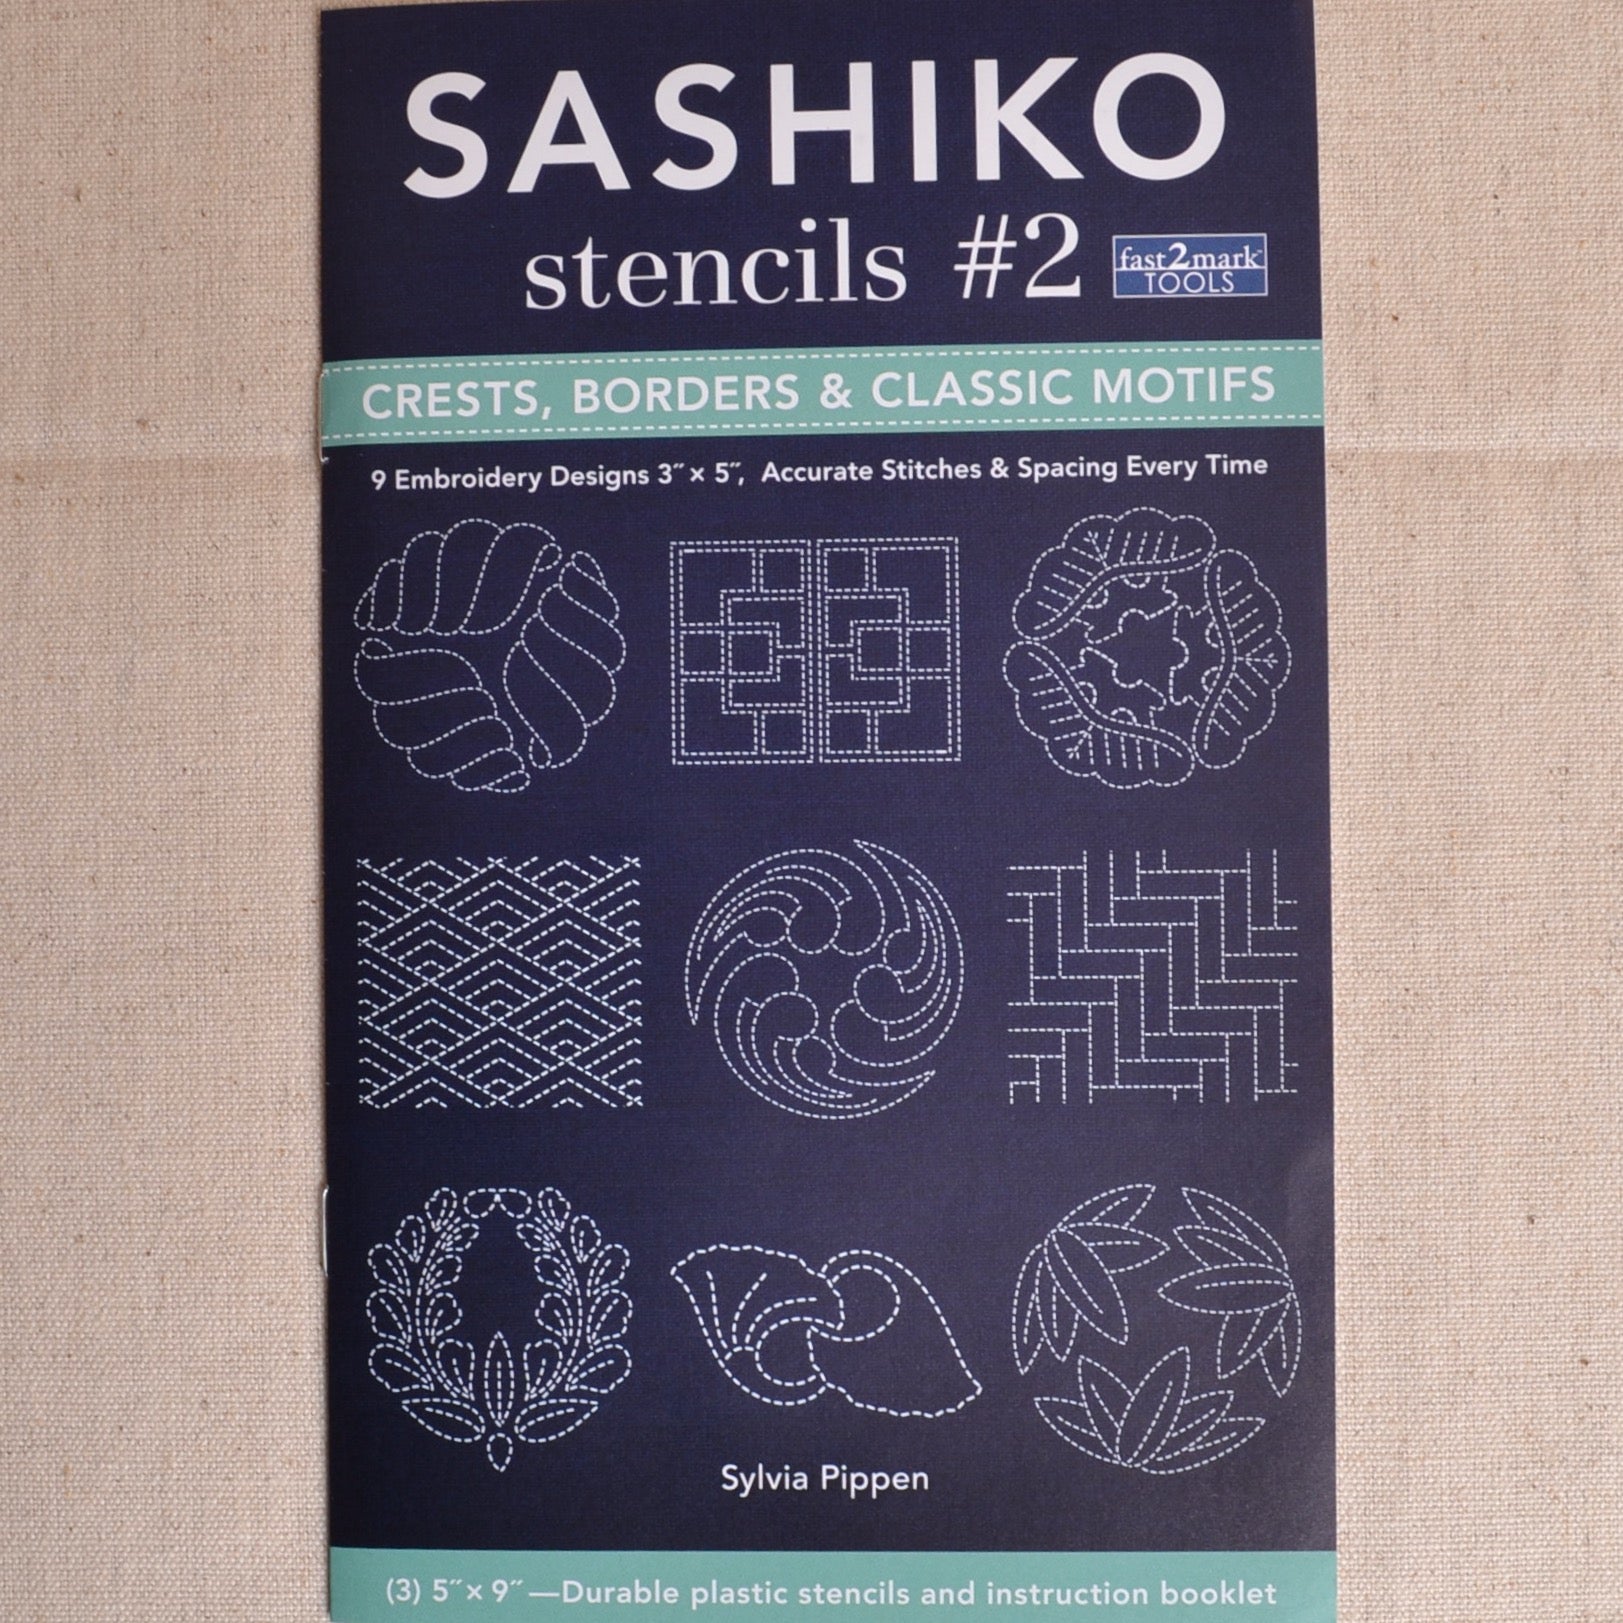 Japan Crafts Exclusive Sashiko Stencils